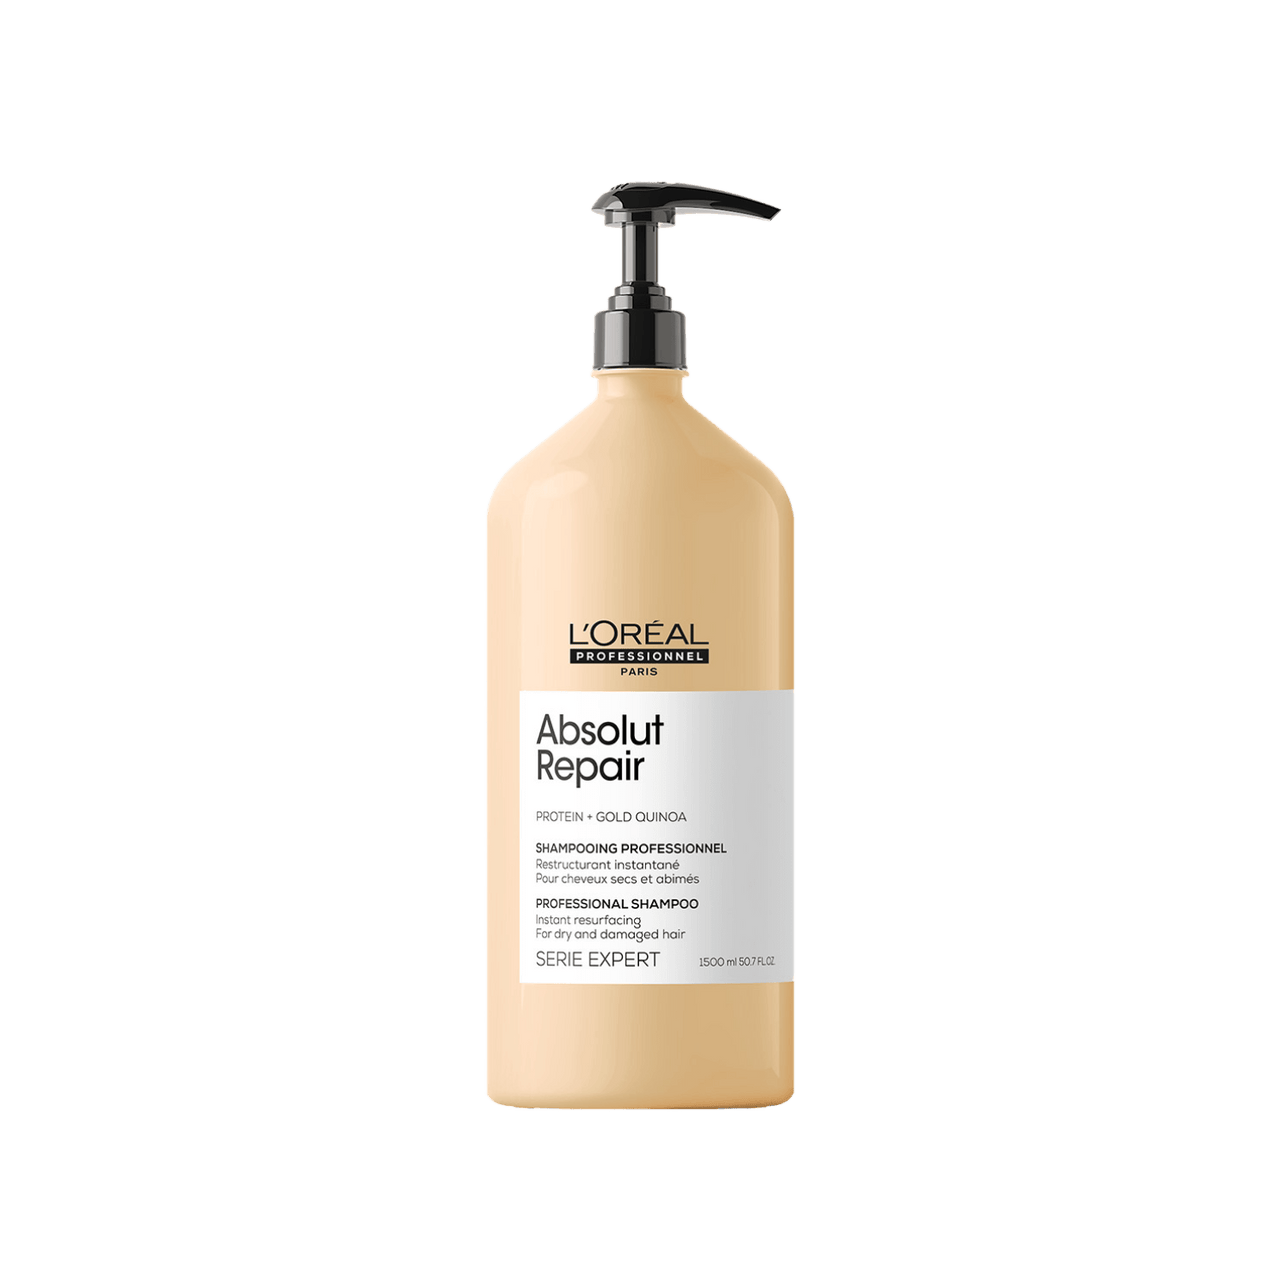 L'Oréal Professionnel Absolut Repair Shampoo 1500mL